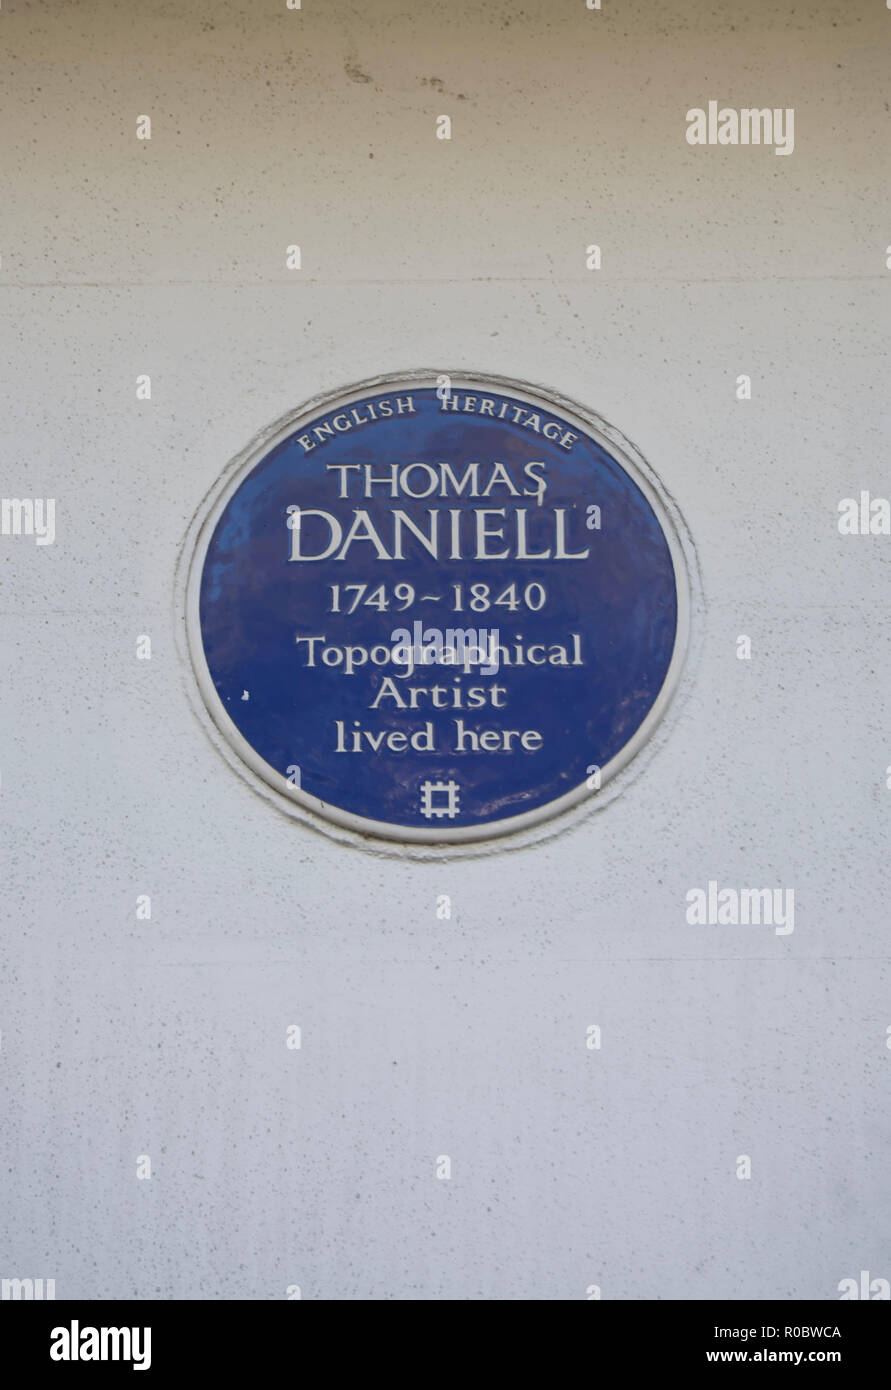 English Heritage targa blu segnando un home topografica artista thomas daniell, earl's terrace, Kensington, Londra, Inghilterra Foto Stock